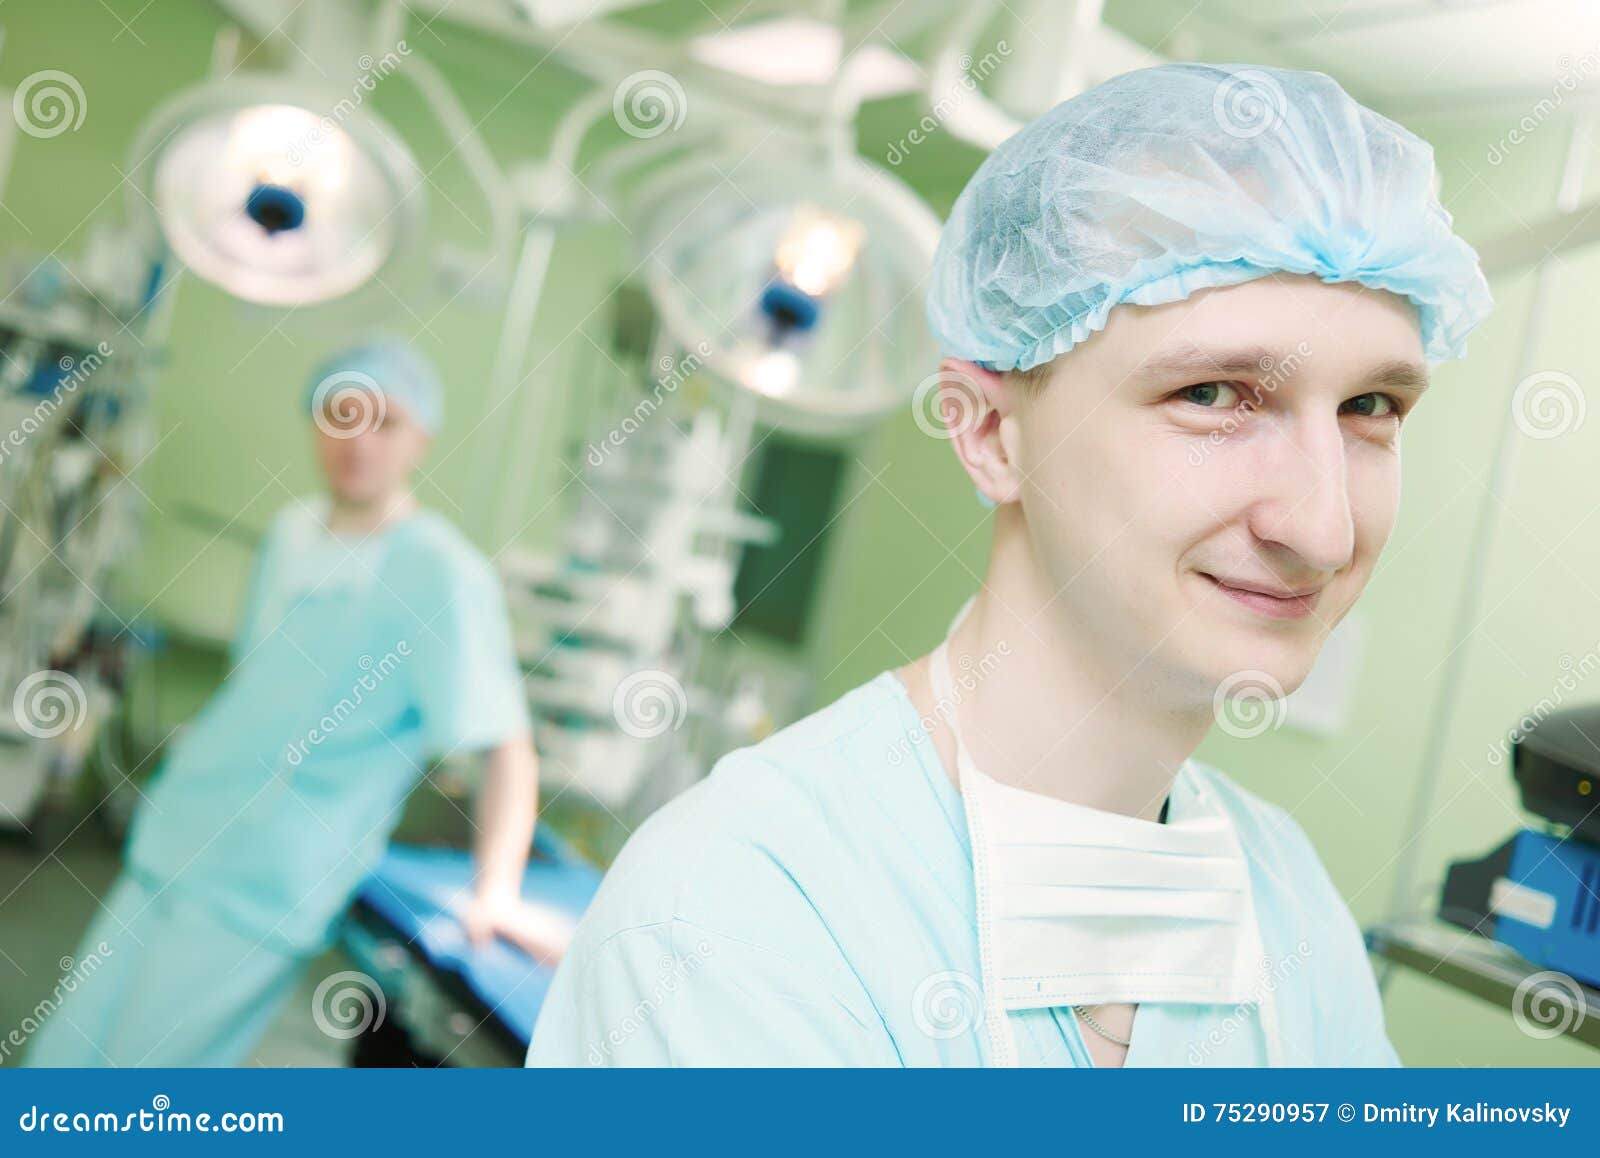 male cardiac surgeon at child cardiosurgery operating room